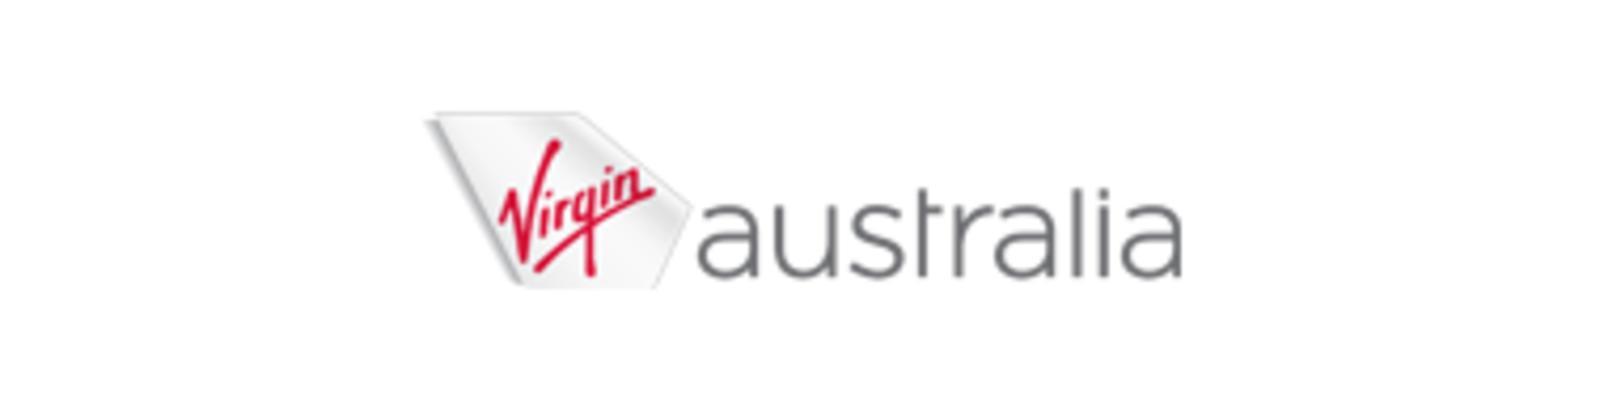 Virgin Blue Logo - Virgin Blue Rebrand to Virgin Australia Complete | Flight Centre Blog